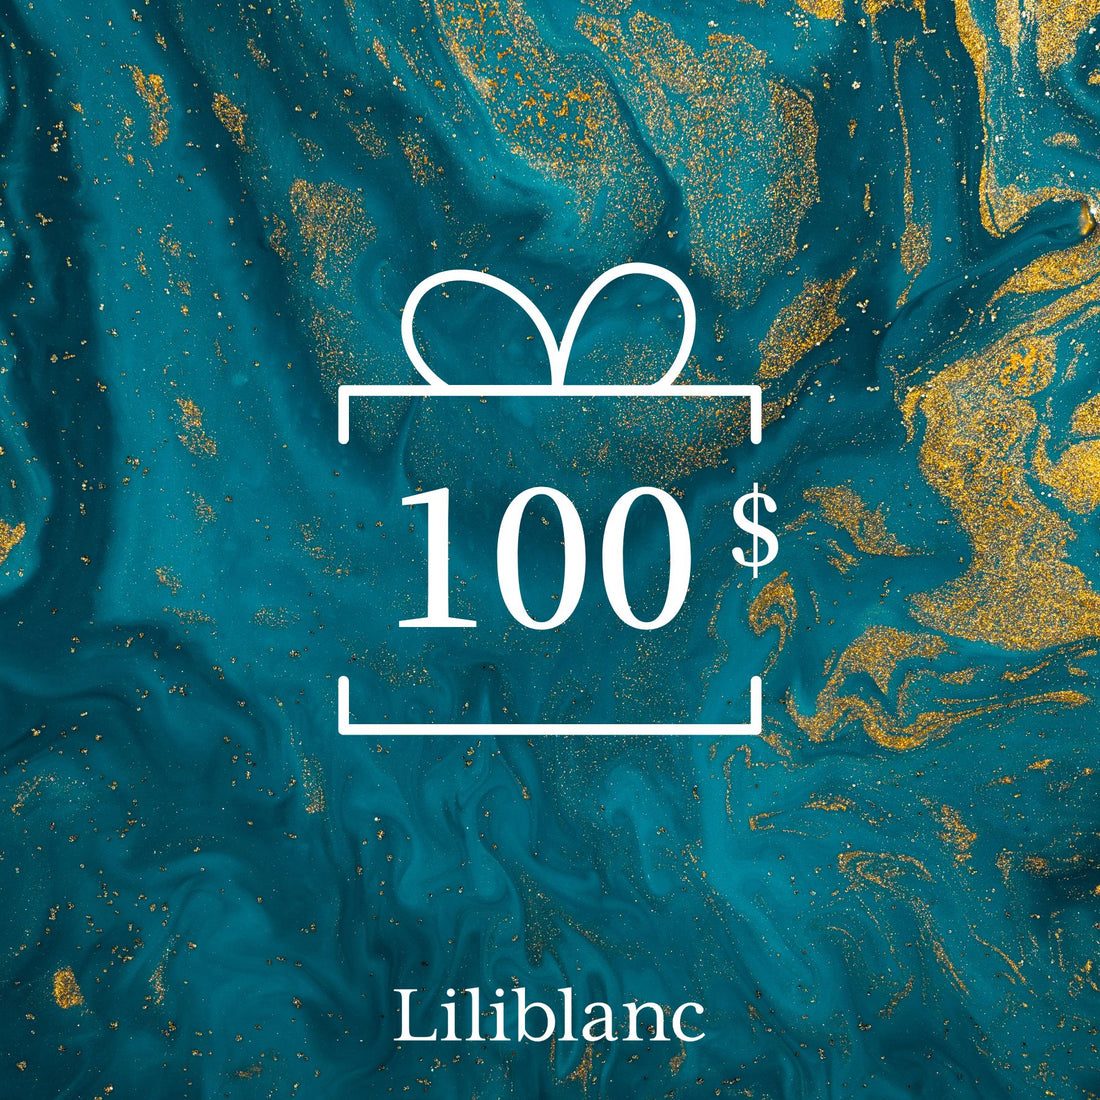 Liliblanc gift card $100